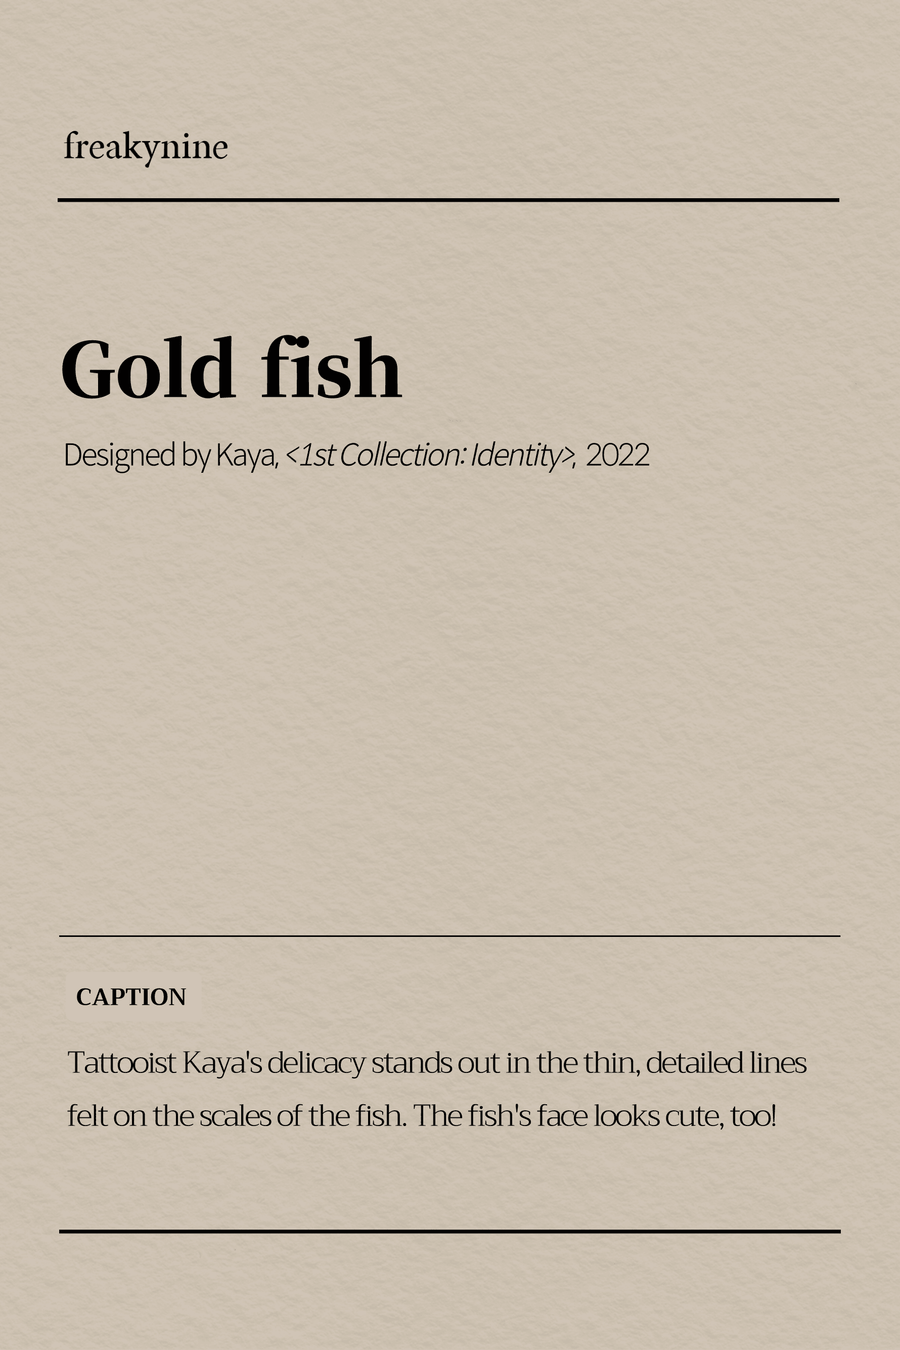 (Kaya) Gold fish (2EA) - freakynine